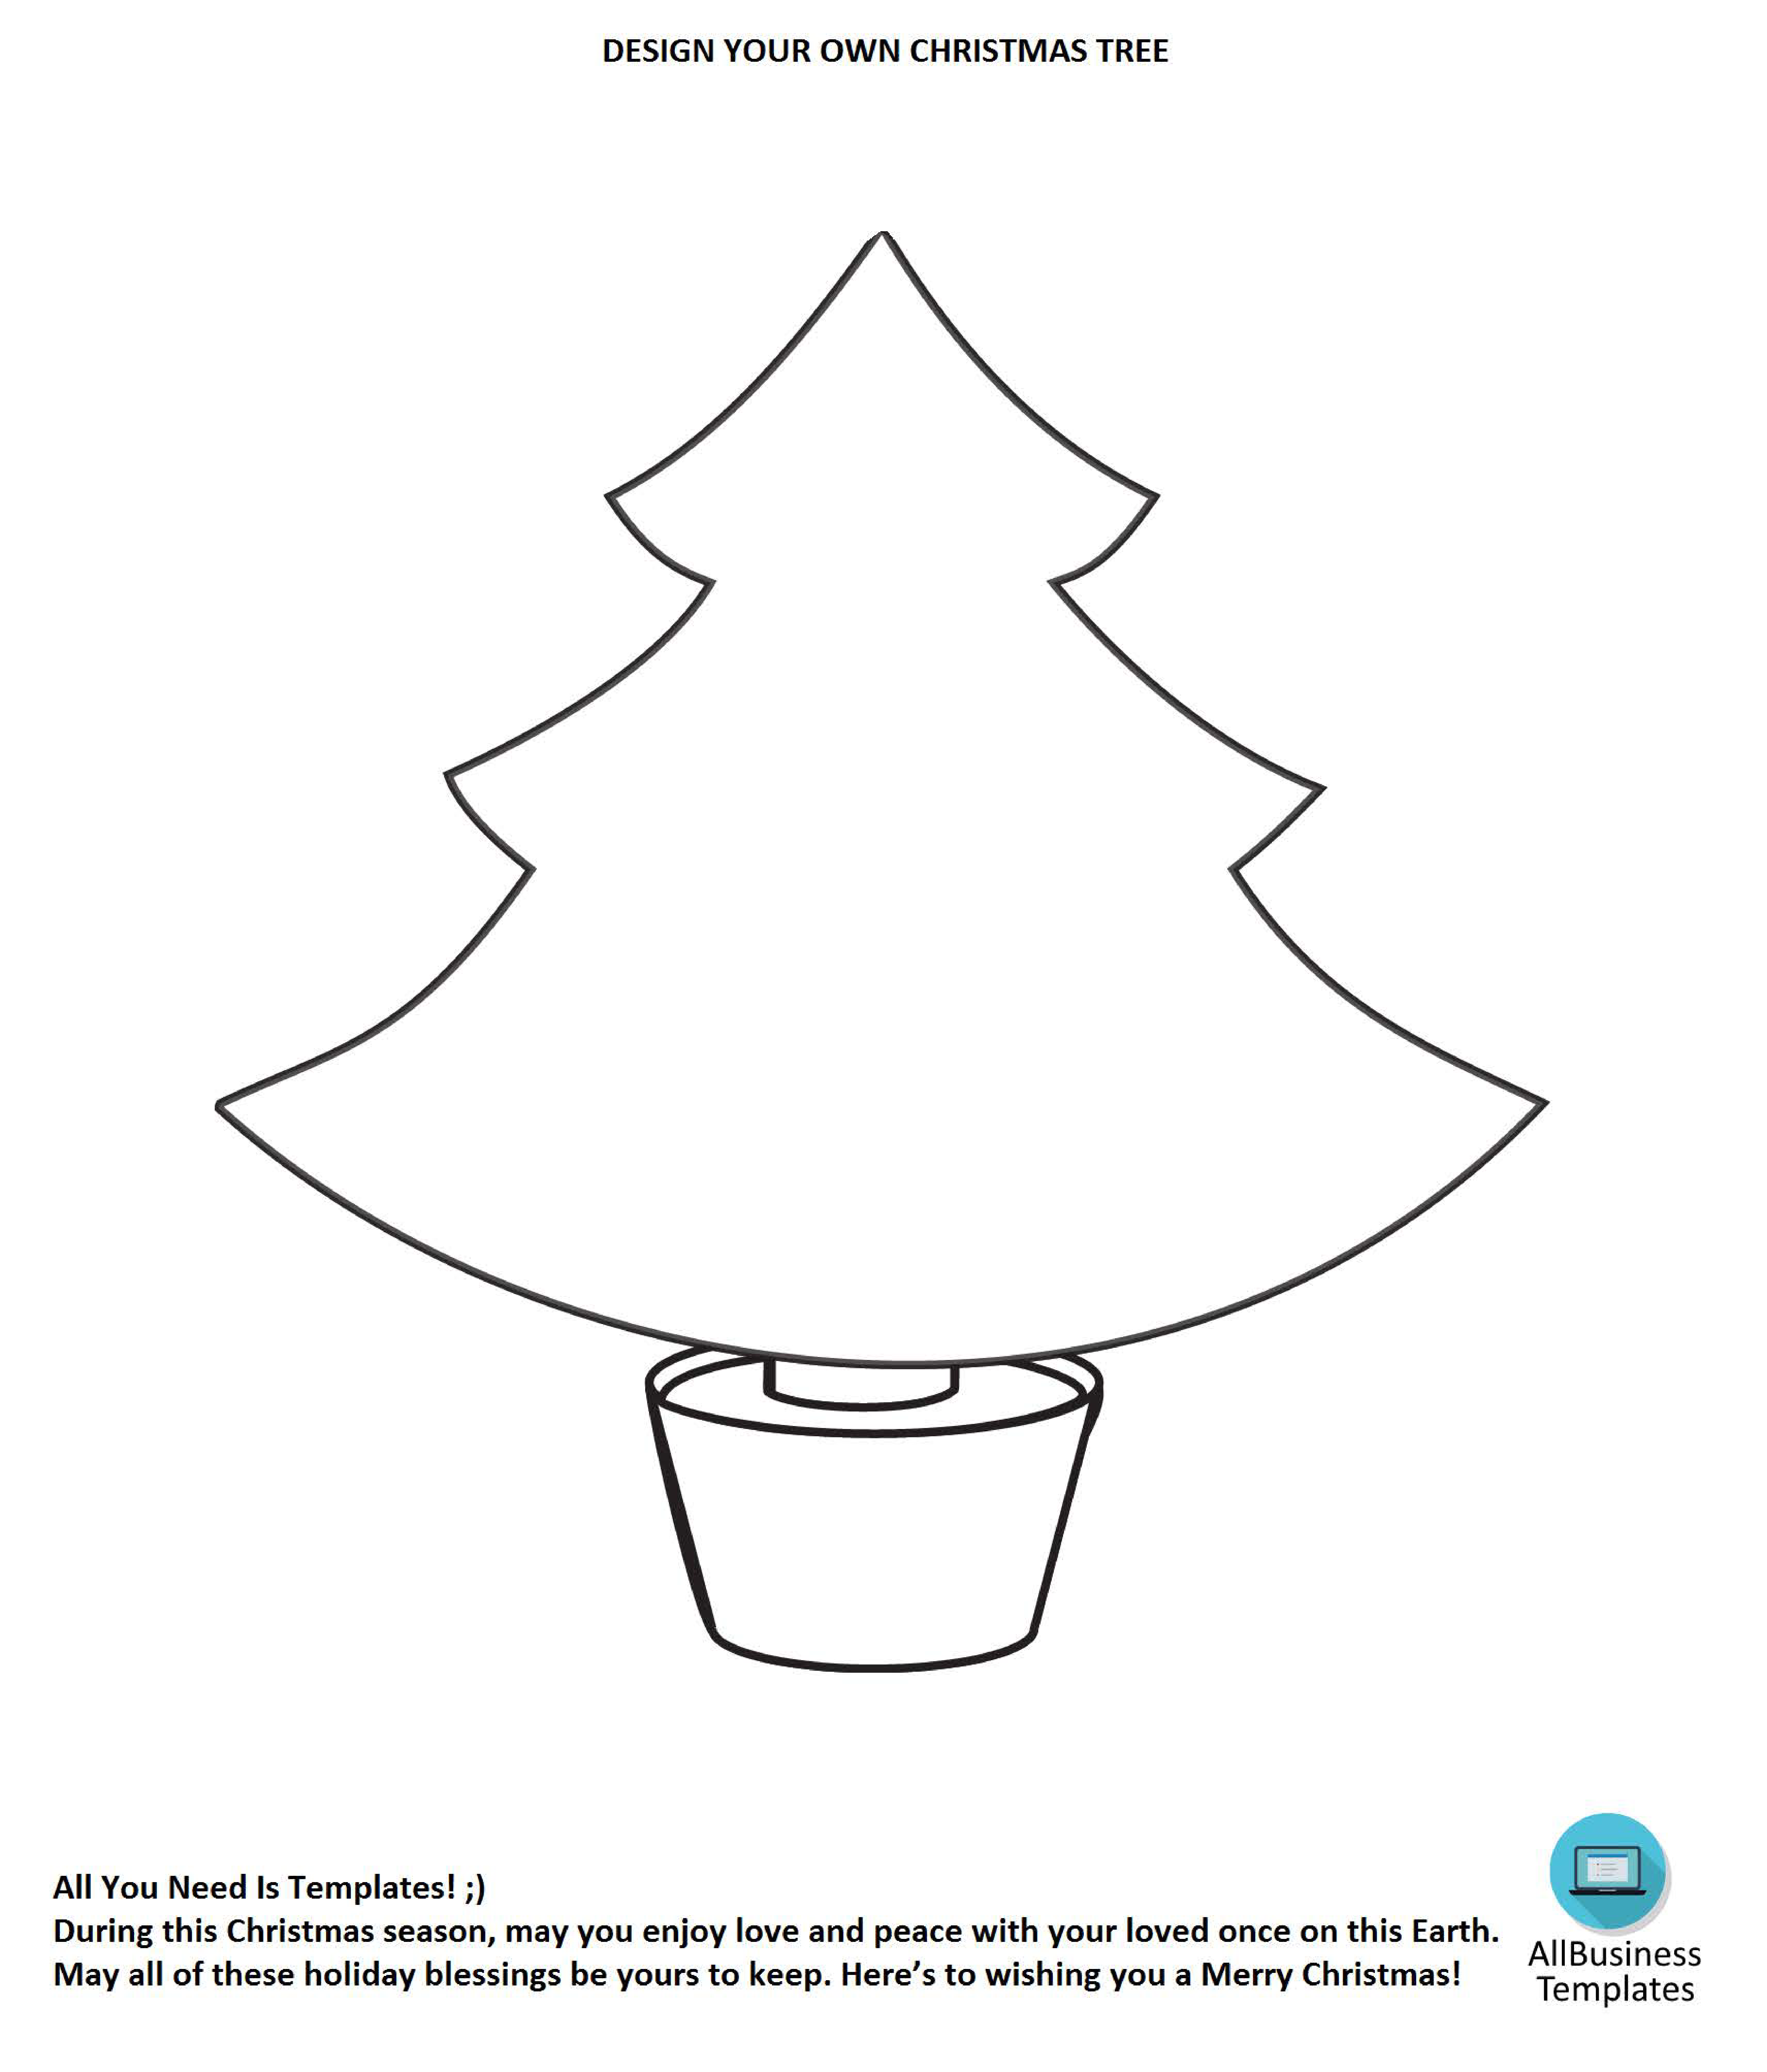 design your own christmas tree template plantilla imagen principal